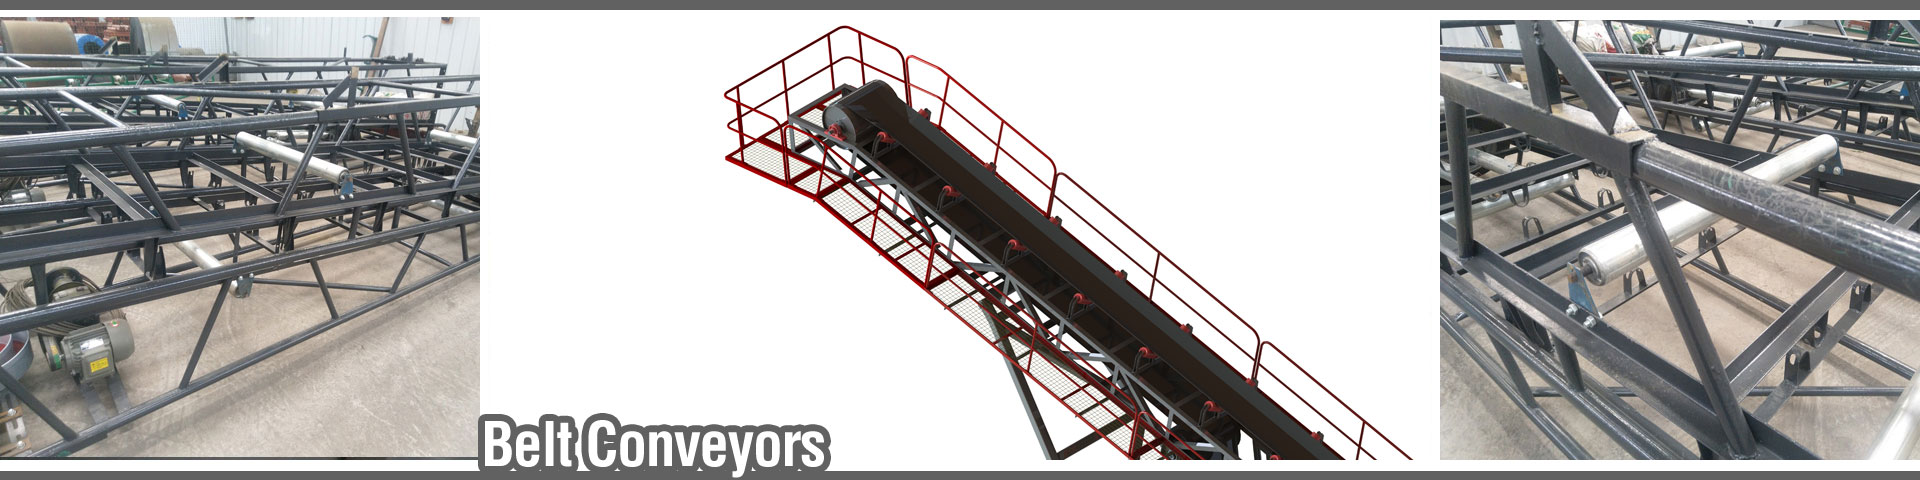 Belt-Conveyors